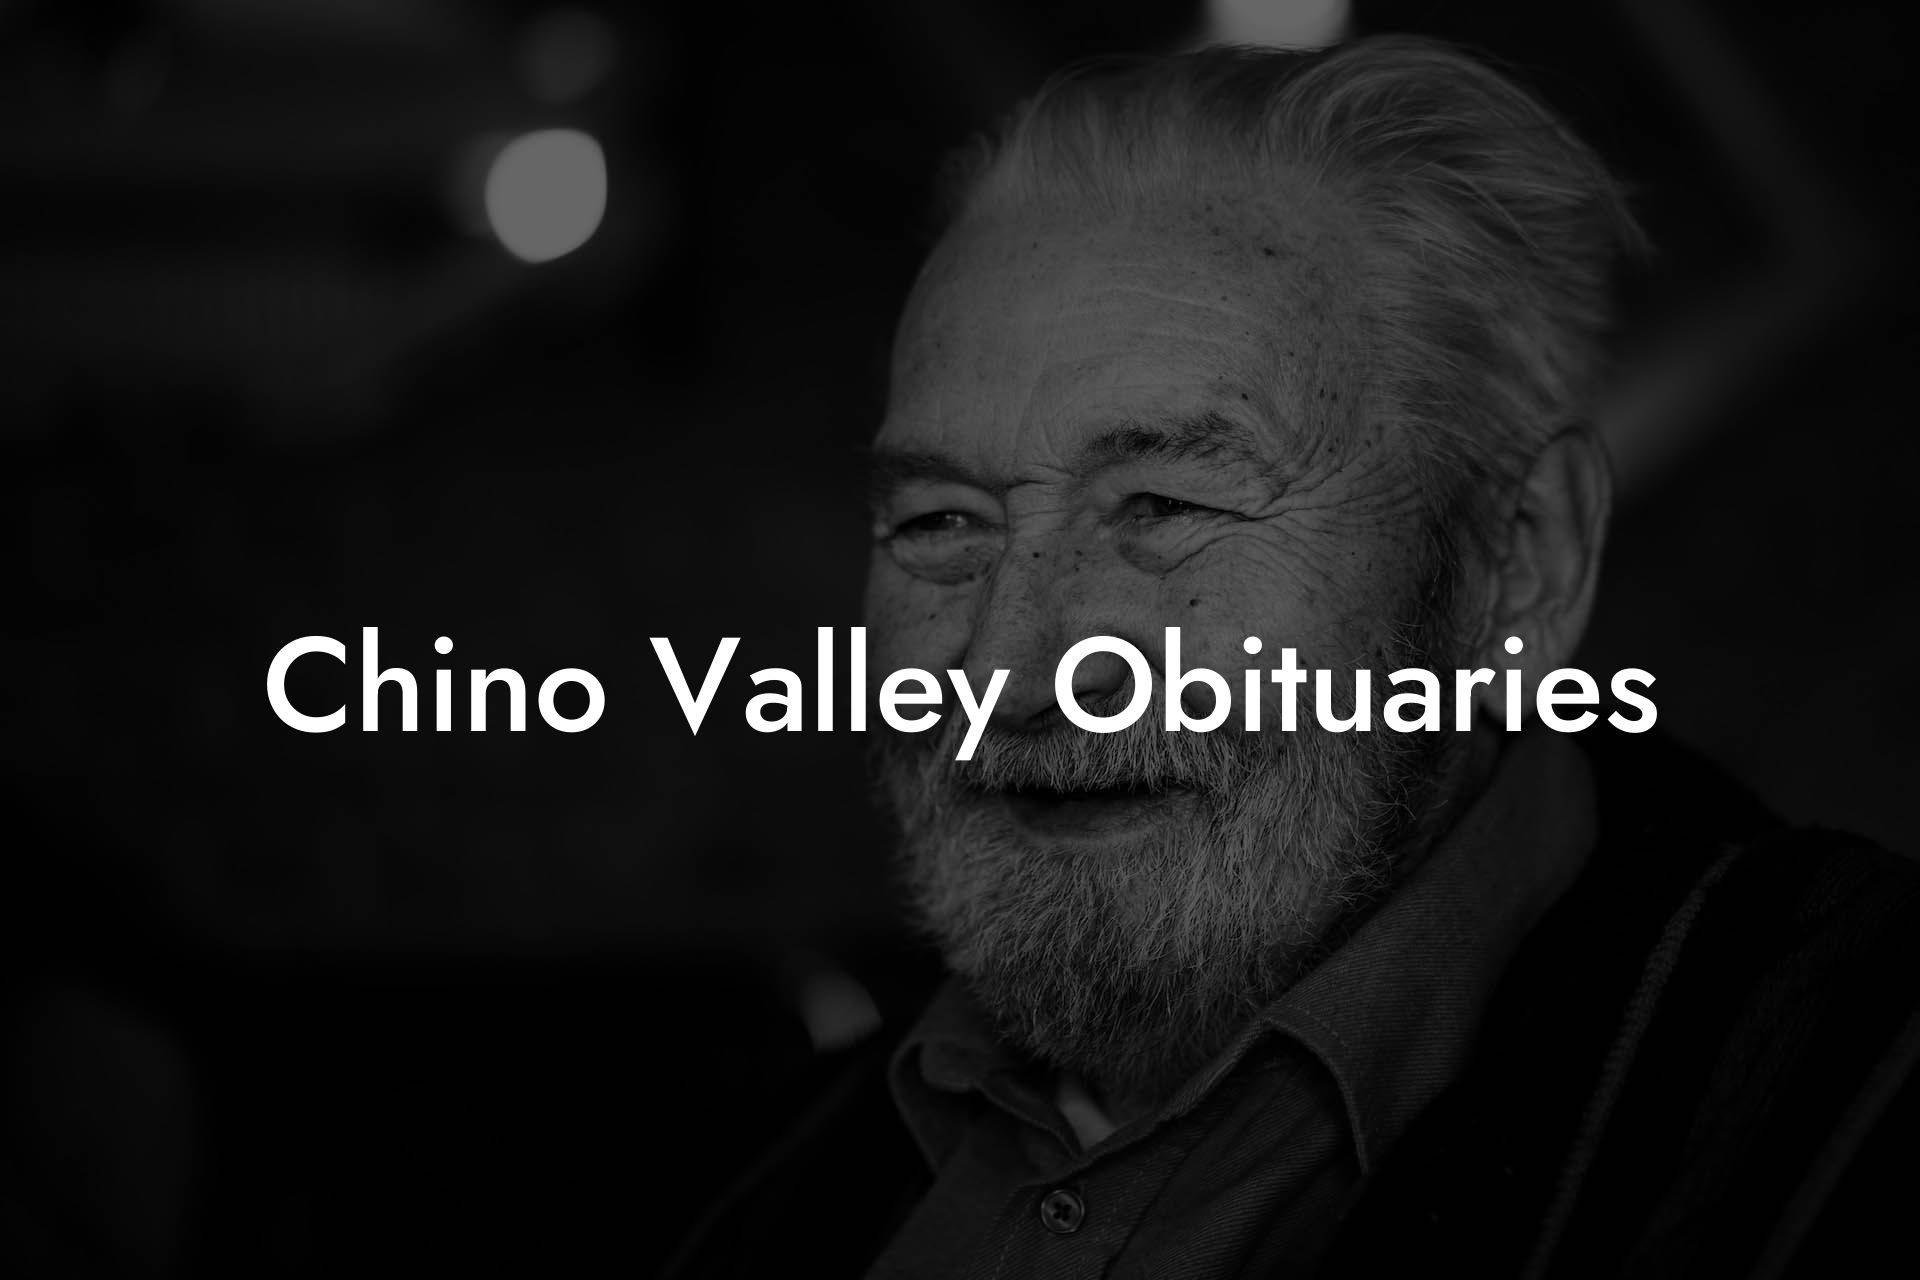 Chino Valley Obituaries